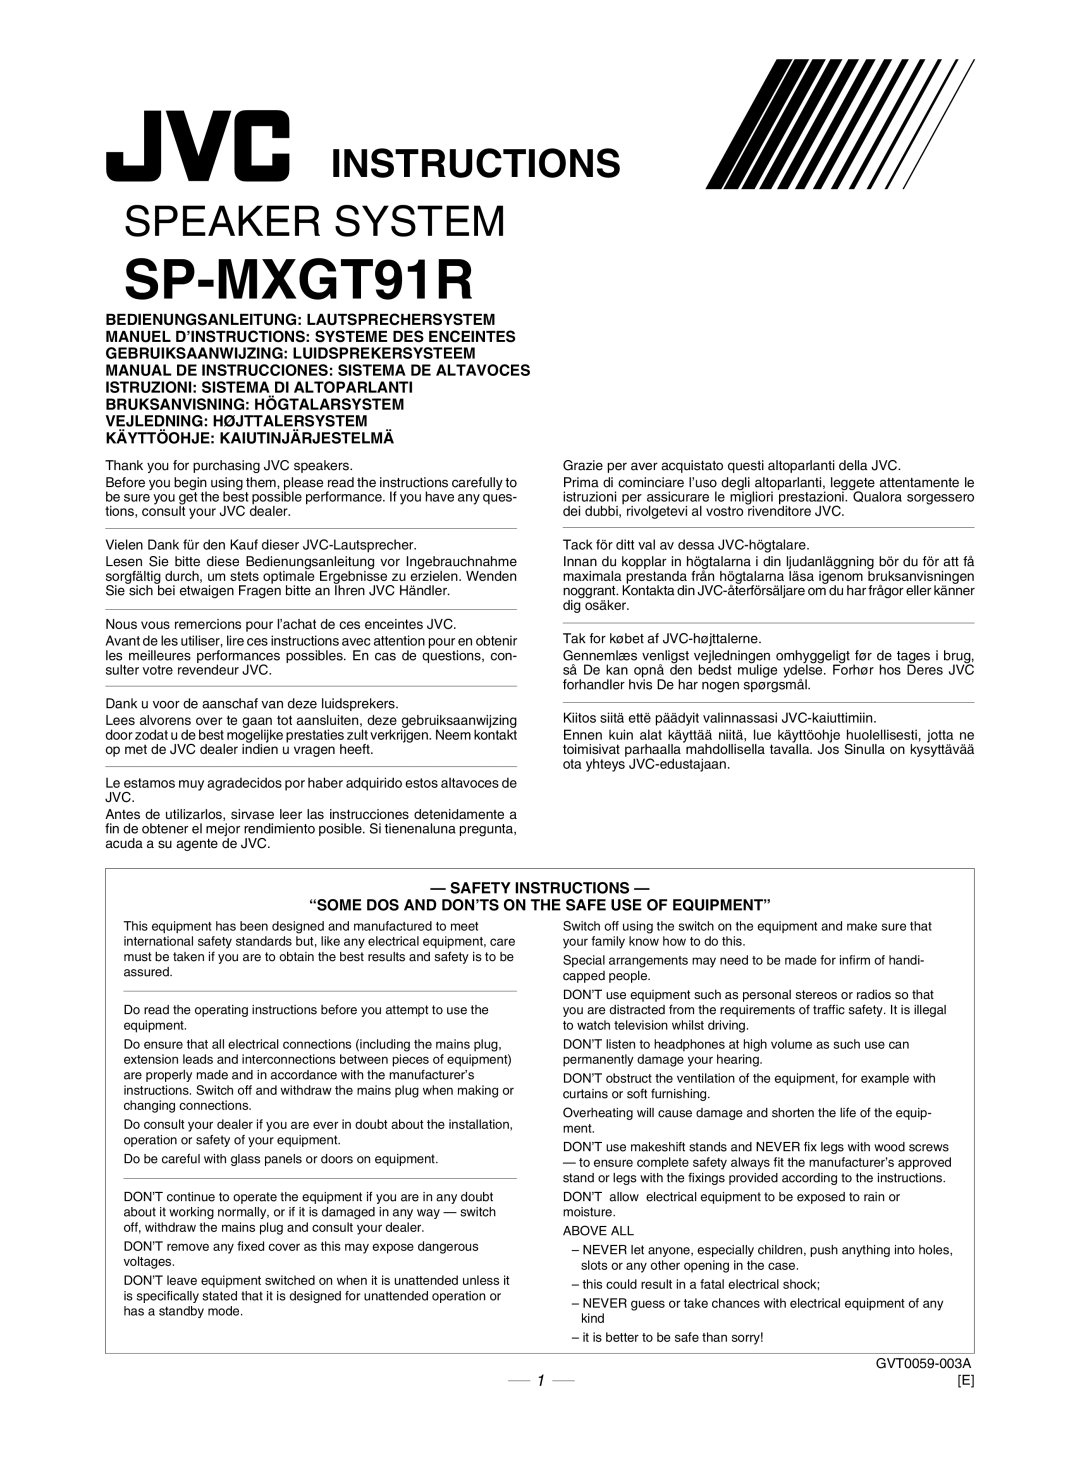 JVC CA-MXGT91R manual Bedienungsanleitung Lautsprechersystem, Manuel D’Instructions Systeme Des Enceintes, SP-MXGT91R 